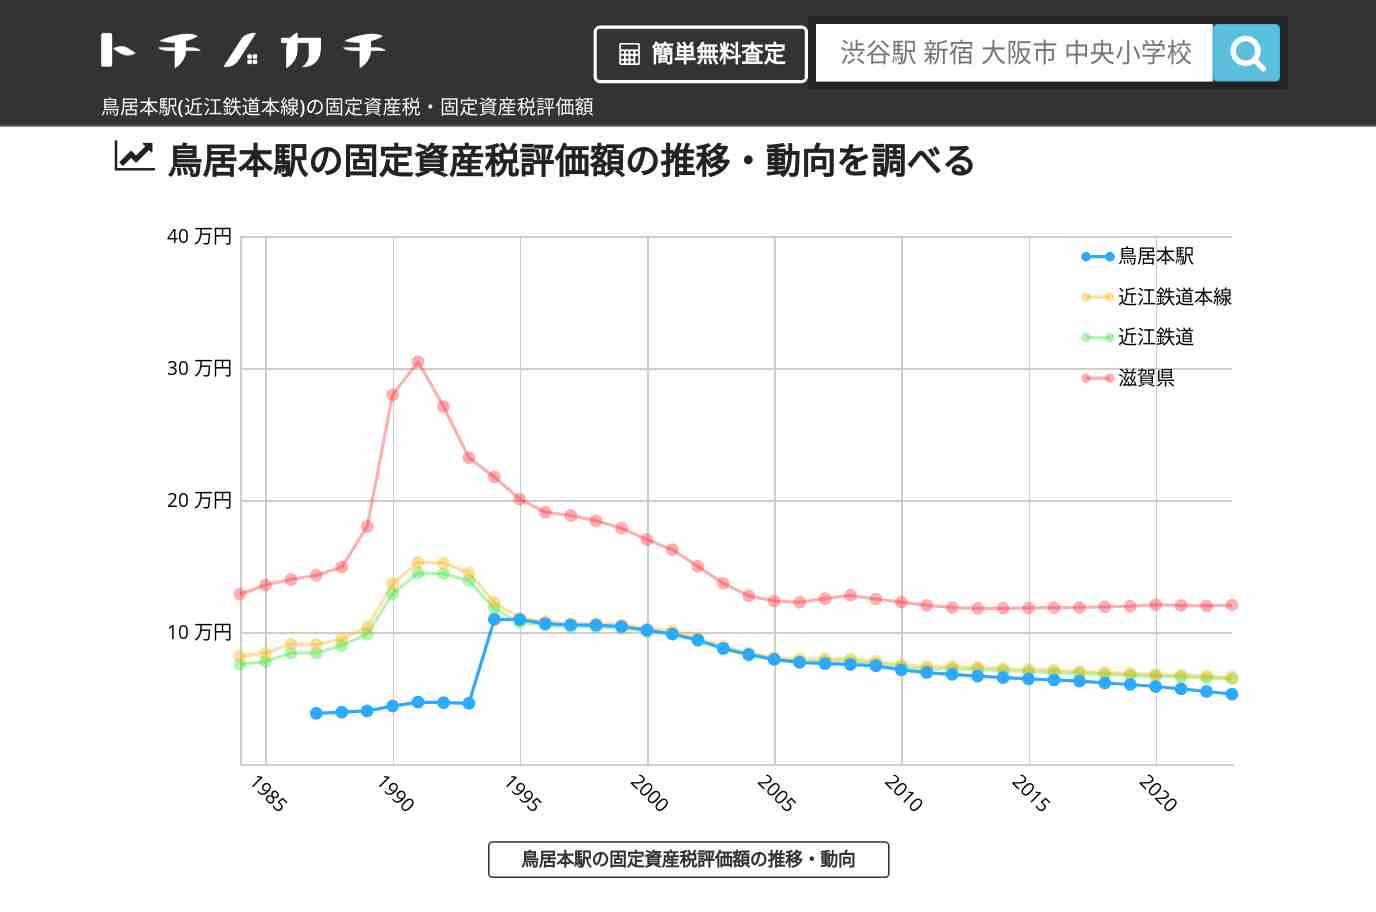 鳥居本駅(近江鉄道本線)の固定資産税・固定資産税評価額 | トチノカチ